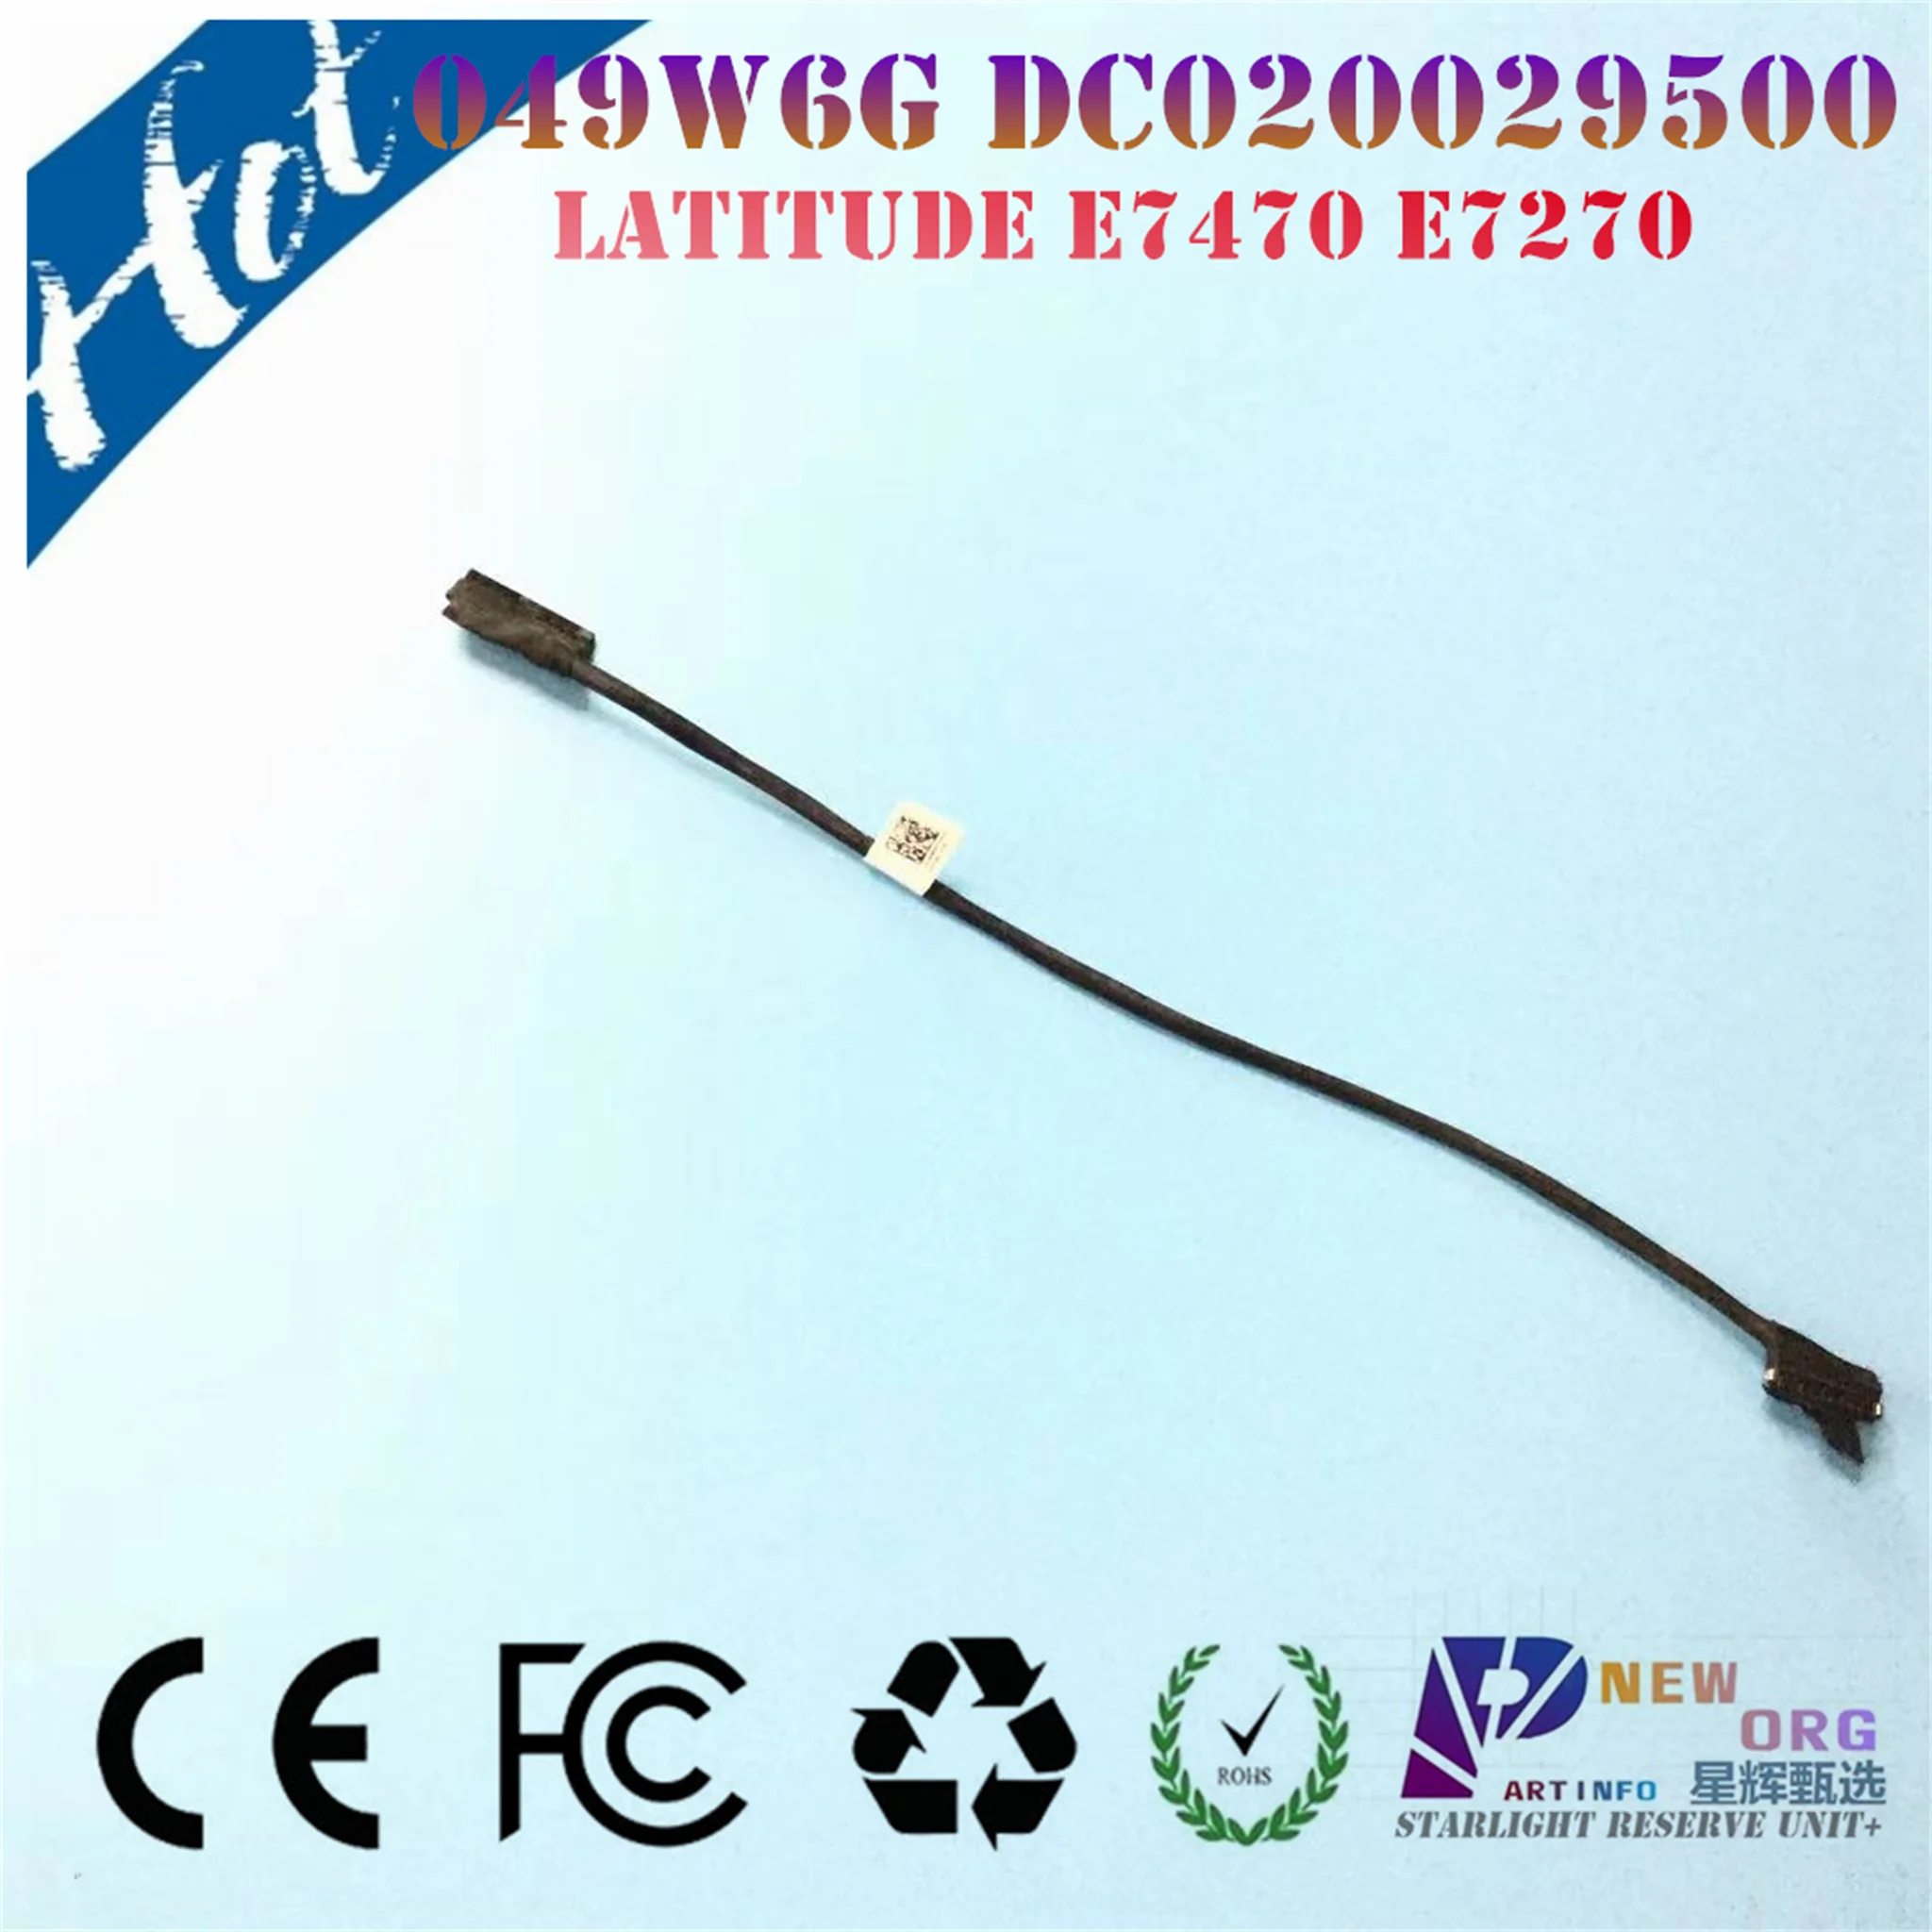 

12PCS/1Doz Laptop Battery Cable for DELL Latitude E7470 E7270 Series 049W6G DC020029500